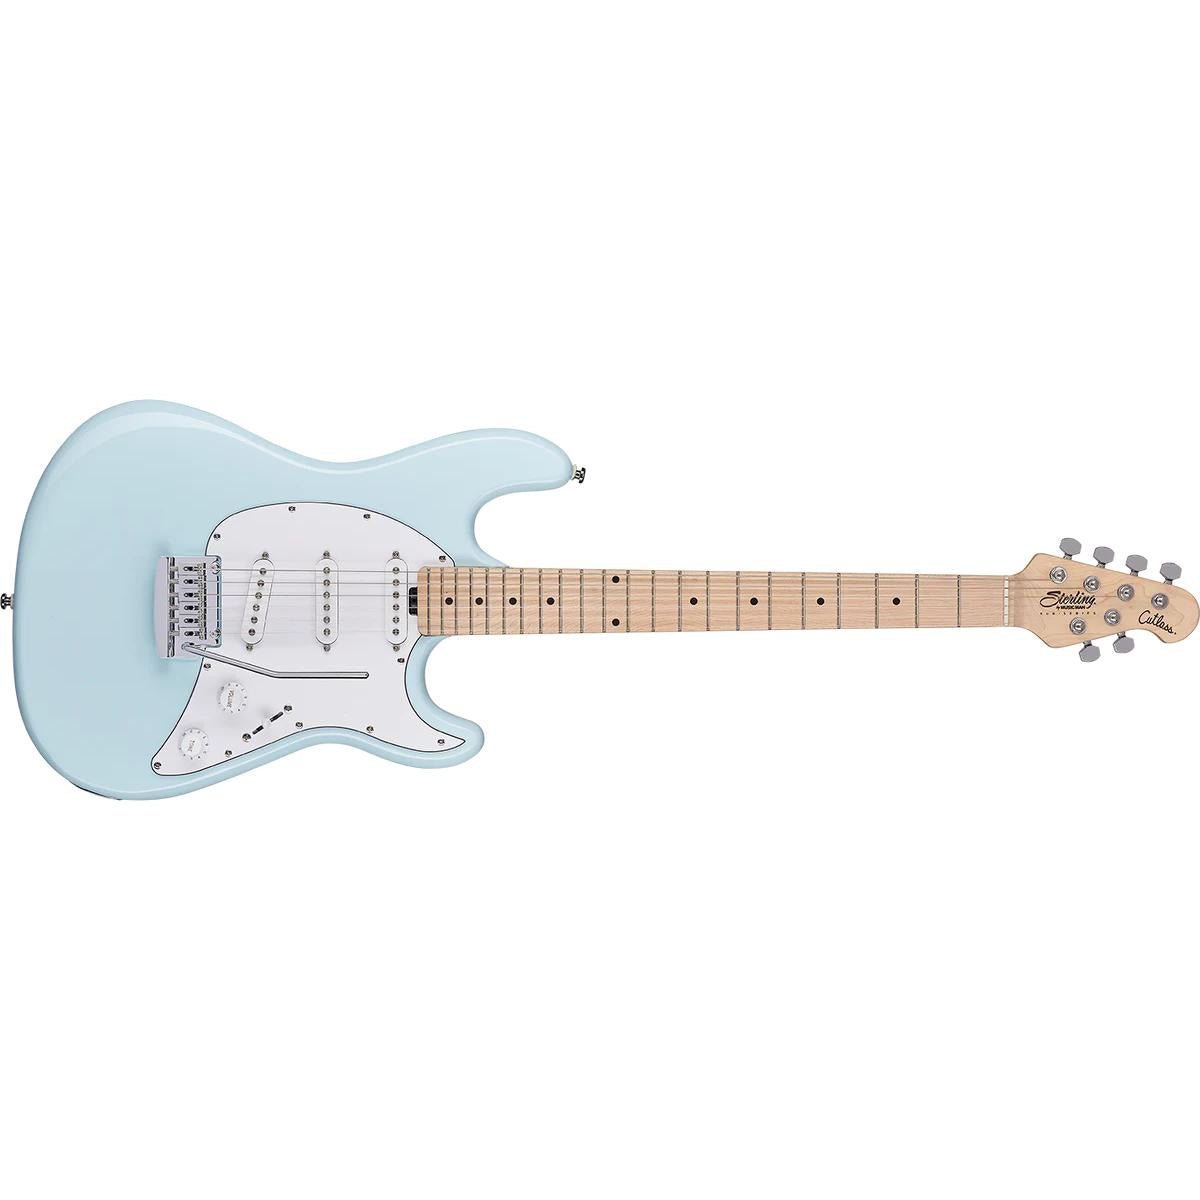 Sterling by Music Man Cutlass CT30SSS Electric Guitar Daphne Blue